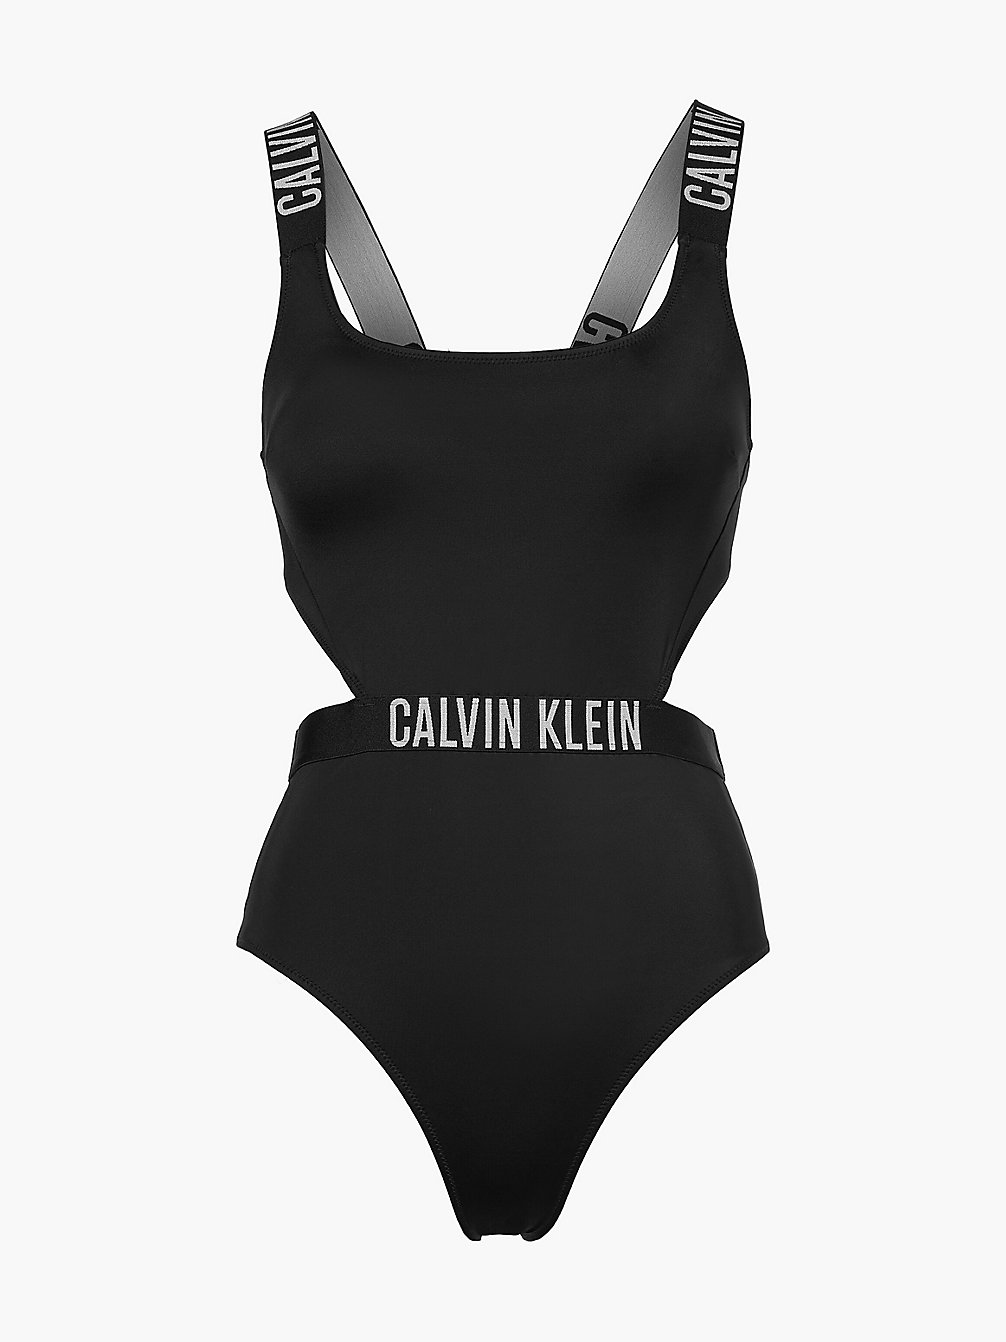 PVH BLACK > Слитный купальник с разрезами - Intense Power > undefined Женщины - Calvin Klein